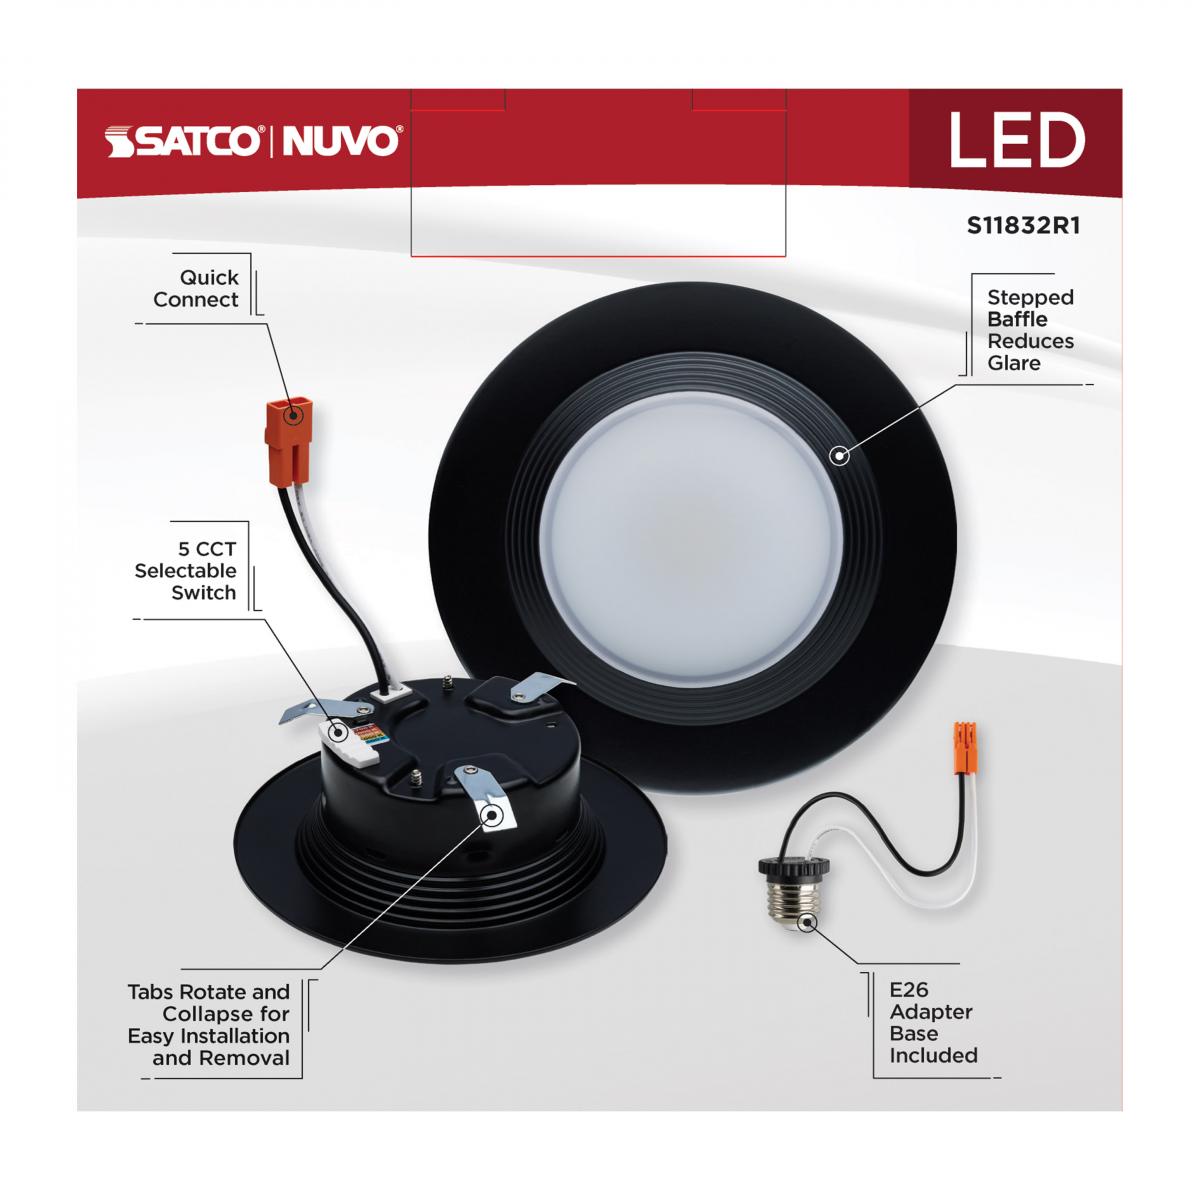 4 Inch Round LED Downlight Retrofit, 7 Watt, 600 Lumens, Selectable CCT, 2700K to 5000K, Baffle Trim, Black Finish